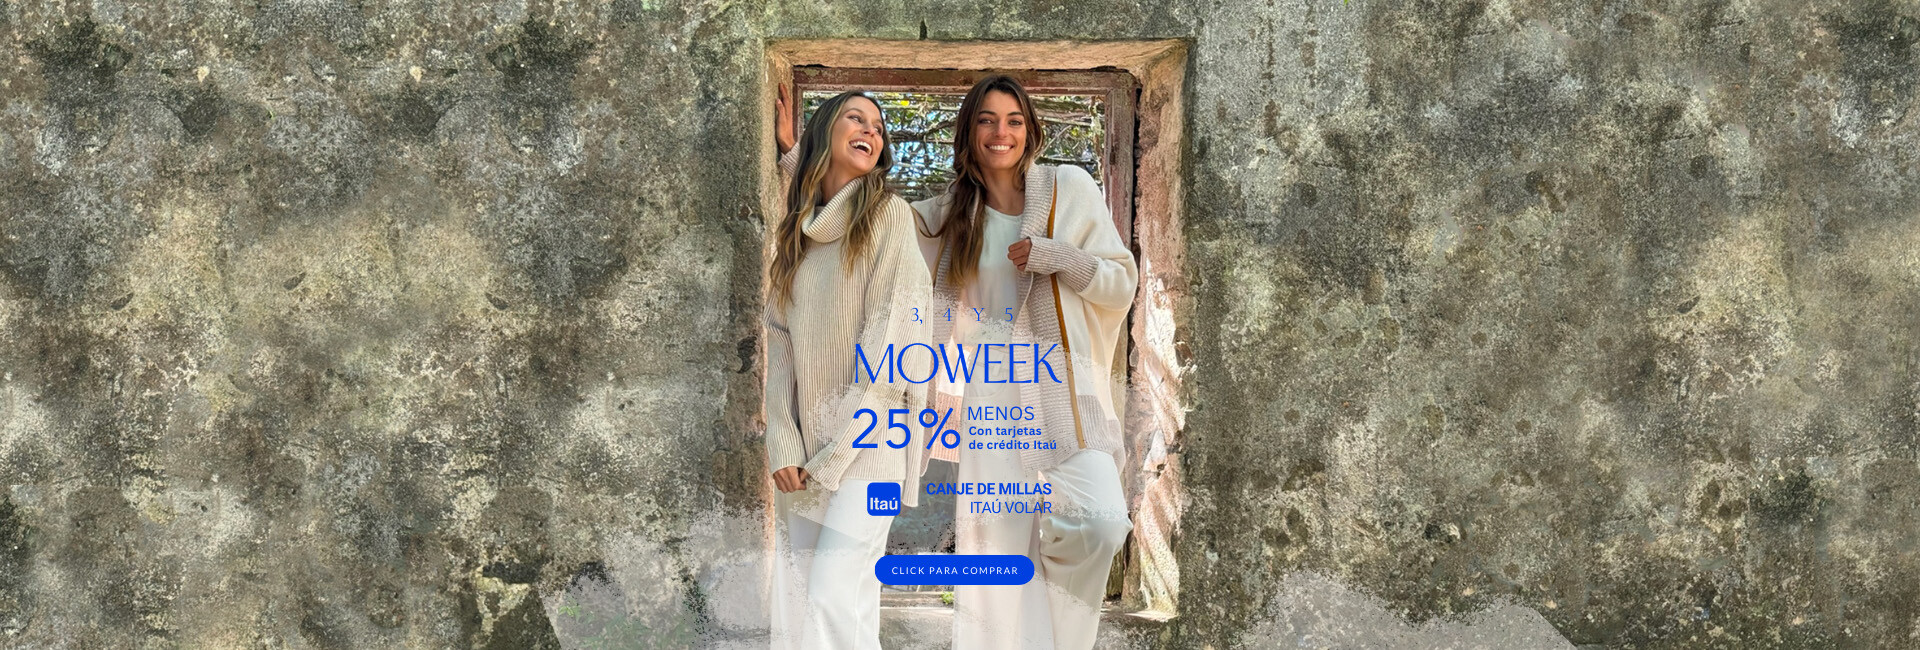 MOWEEK - 25%itau credito